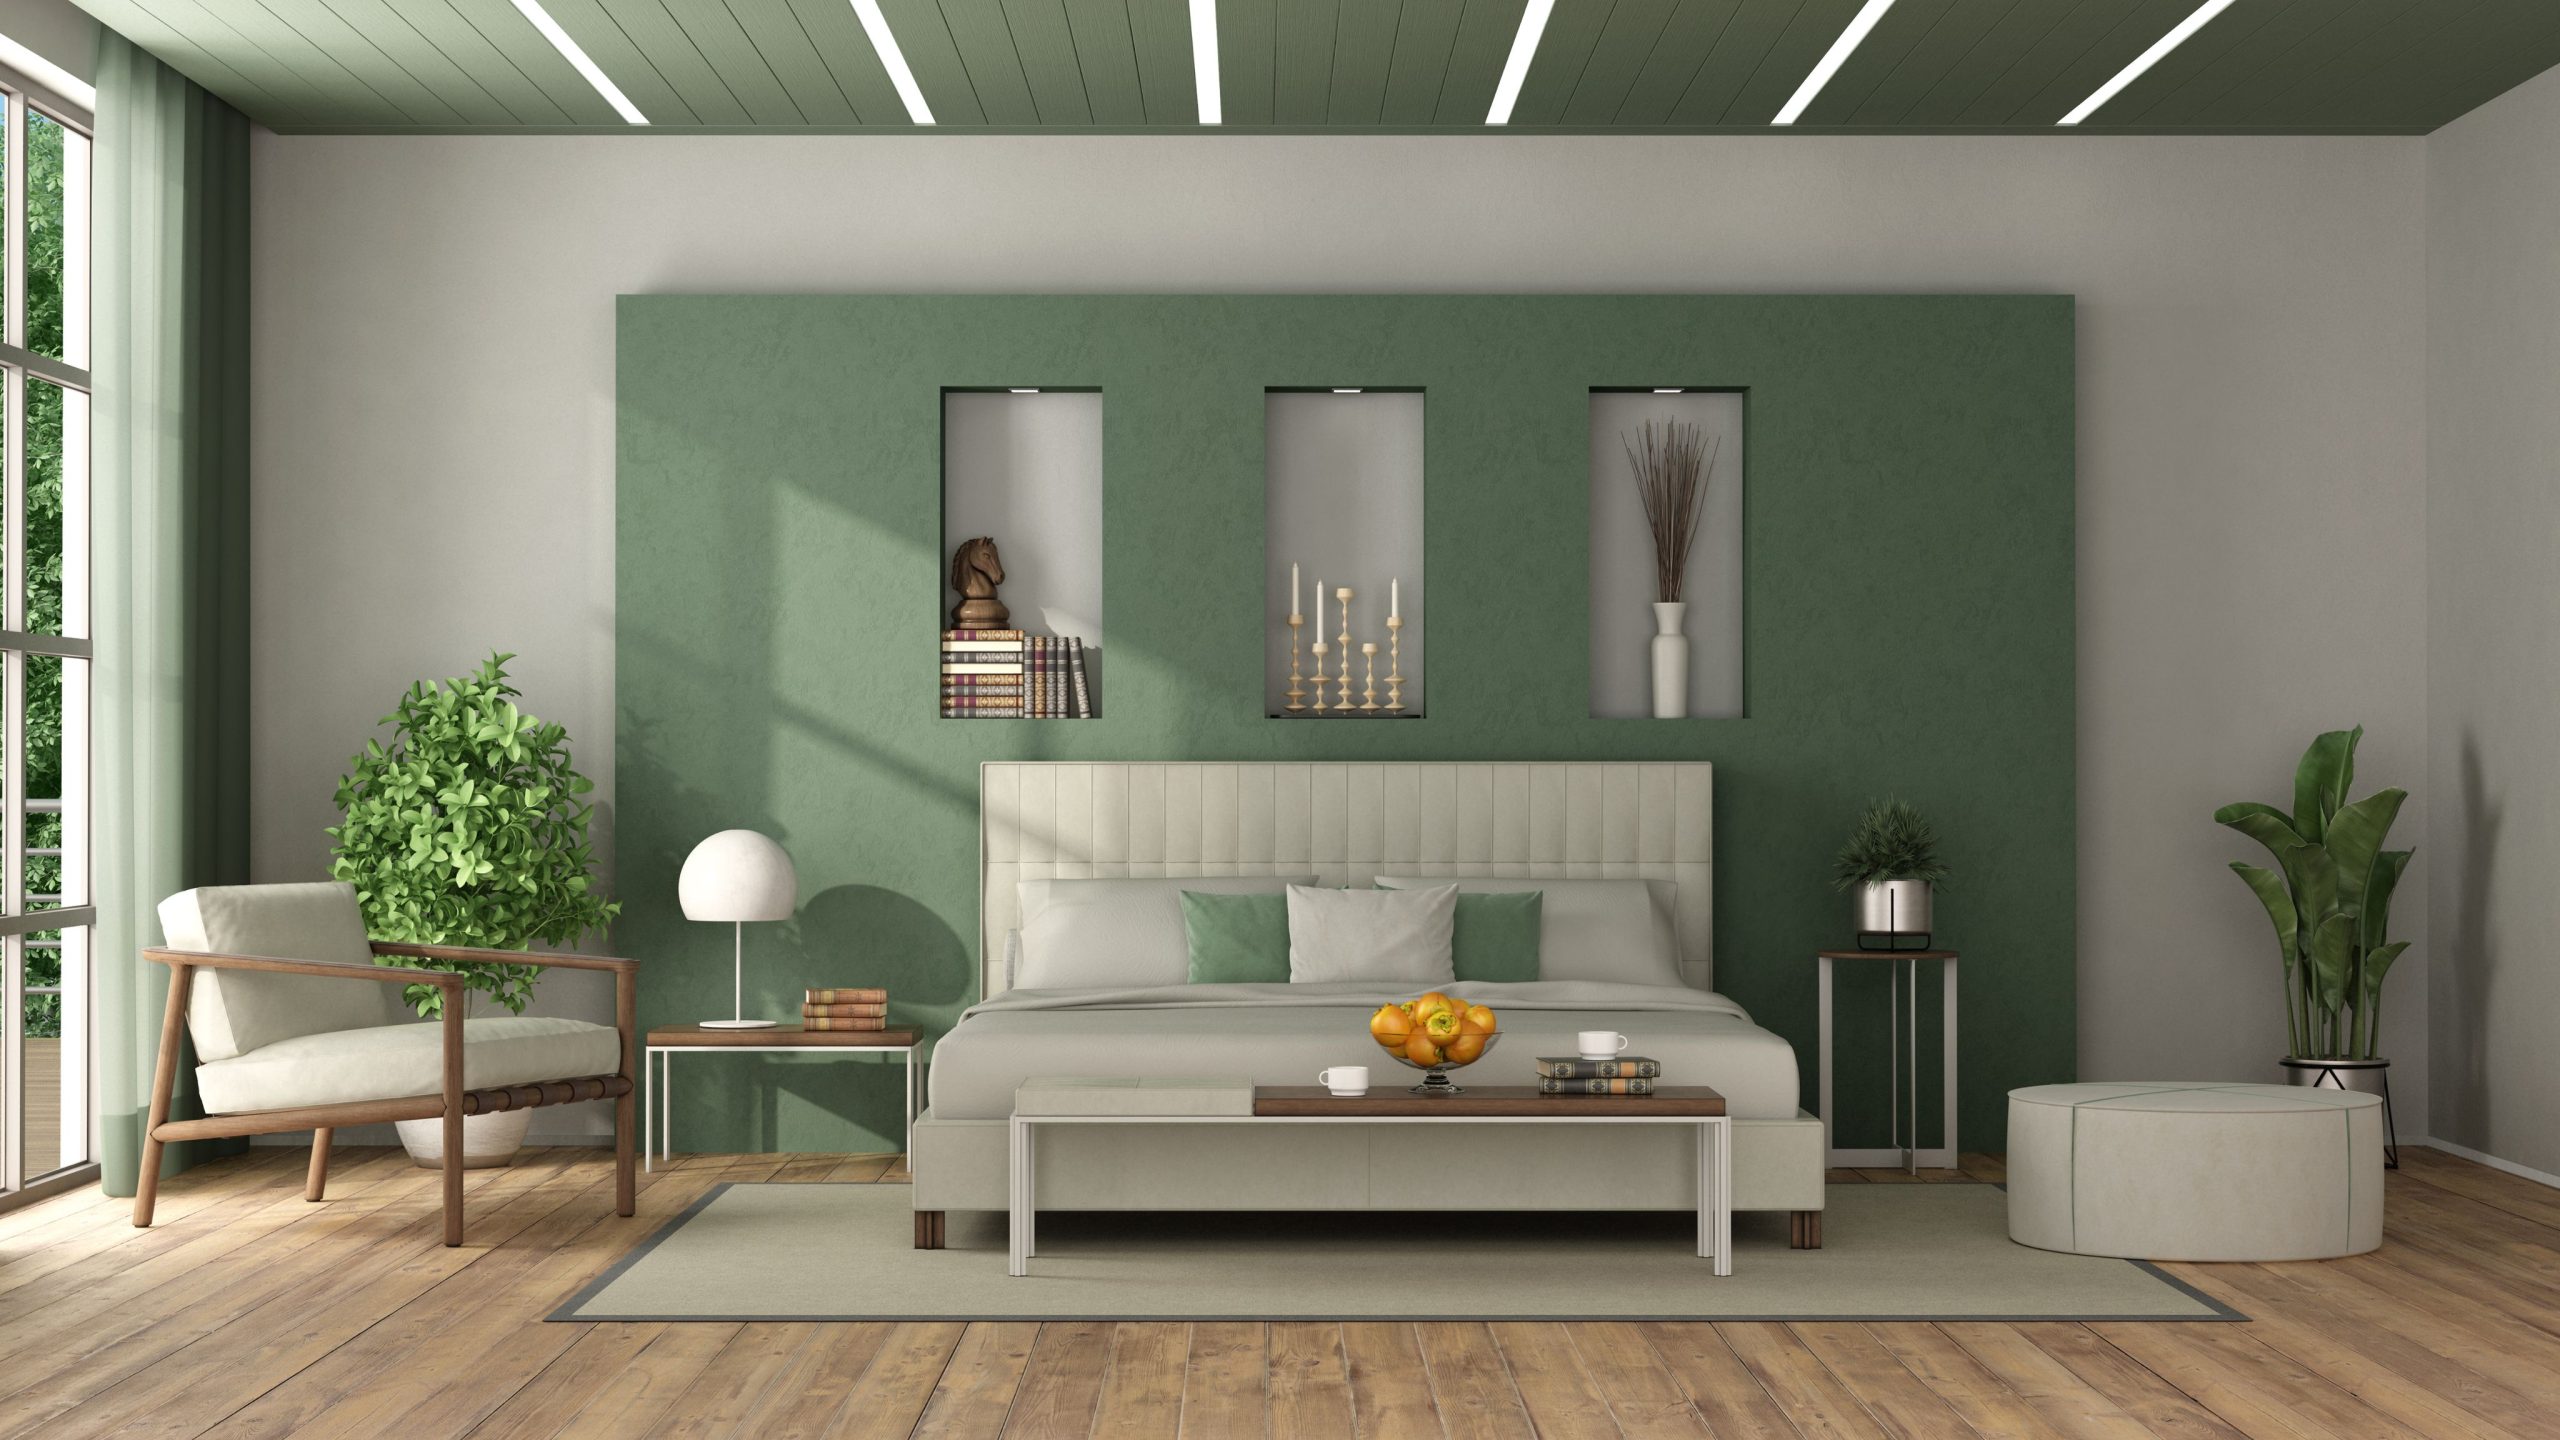  modern bedroom villa furniture